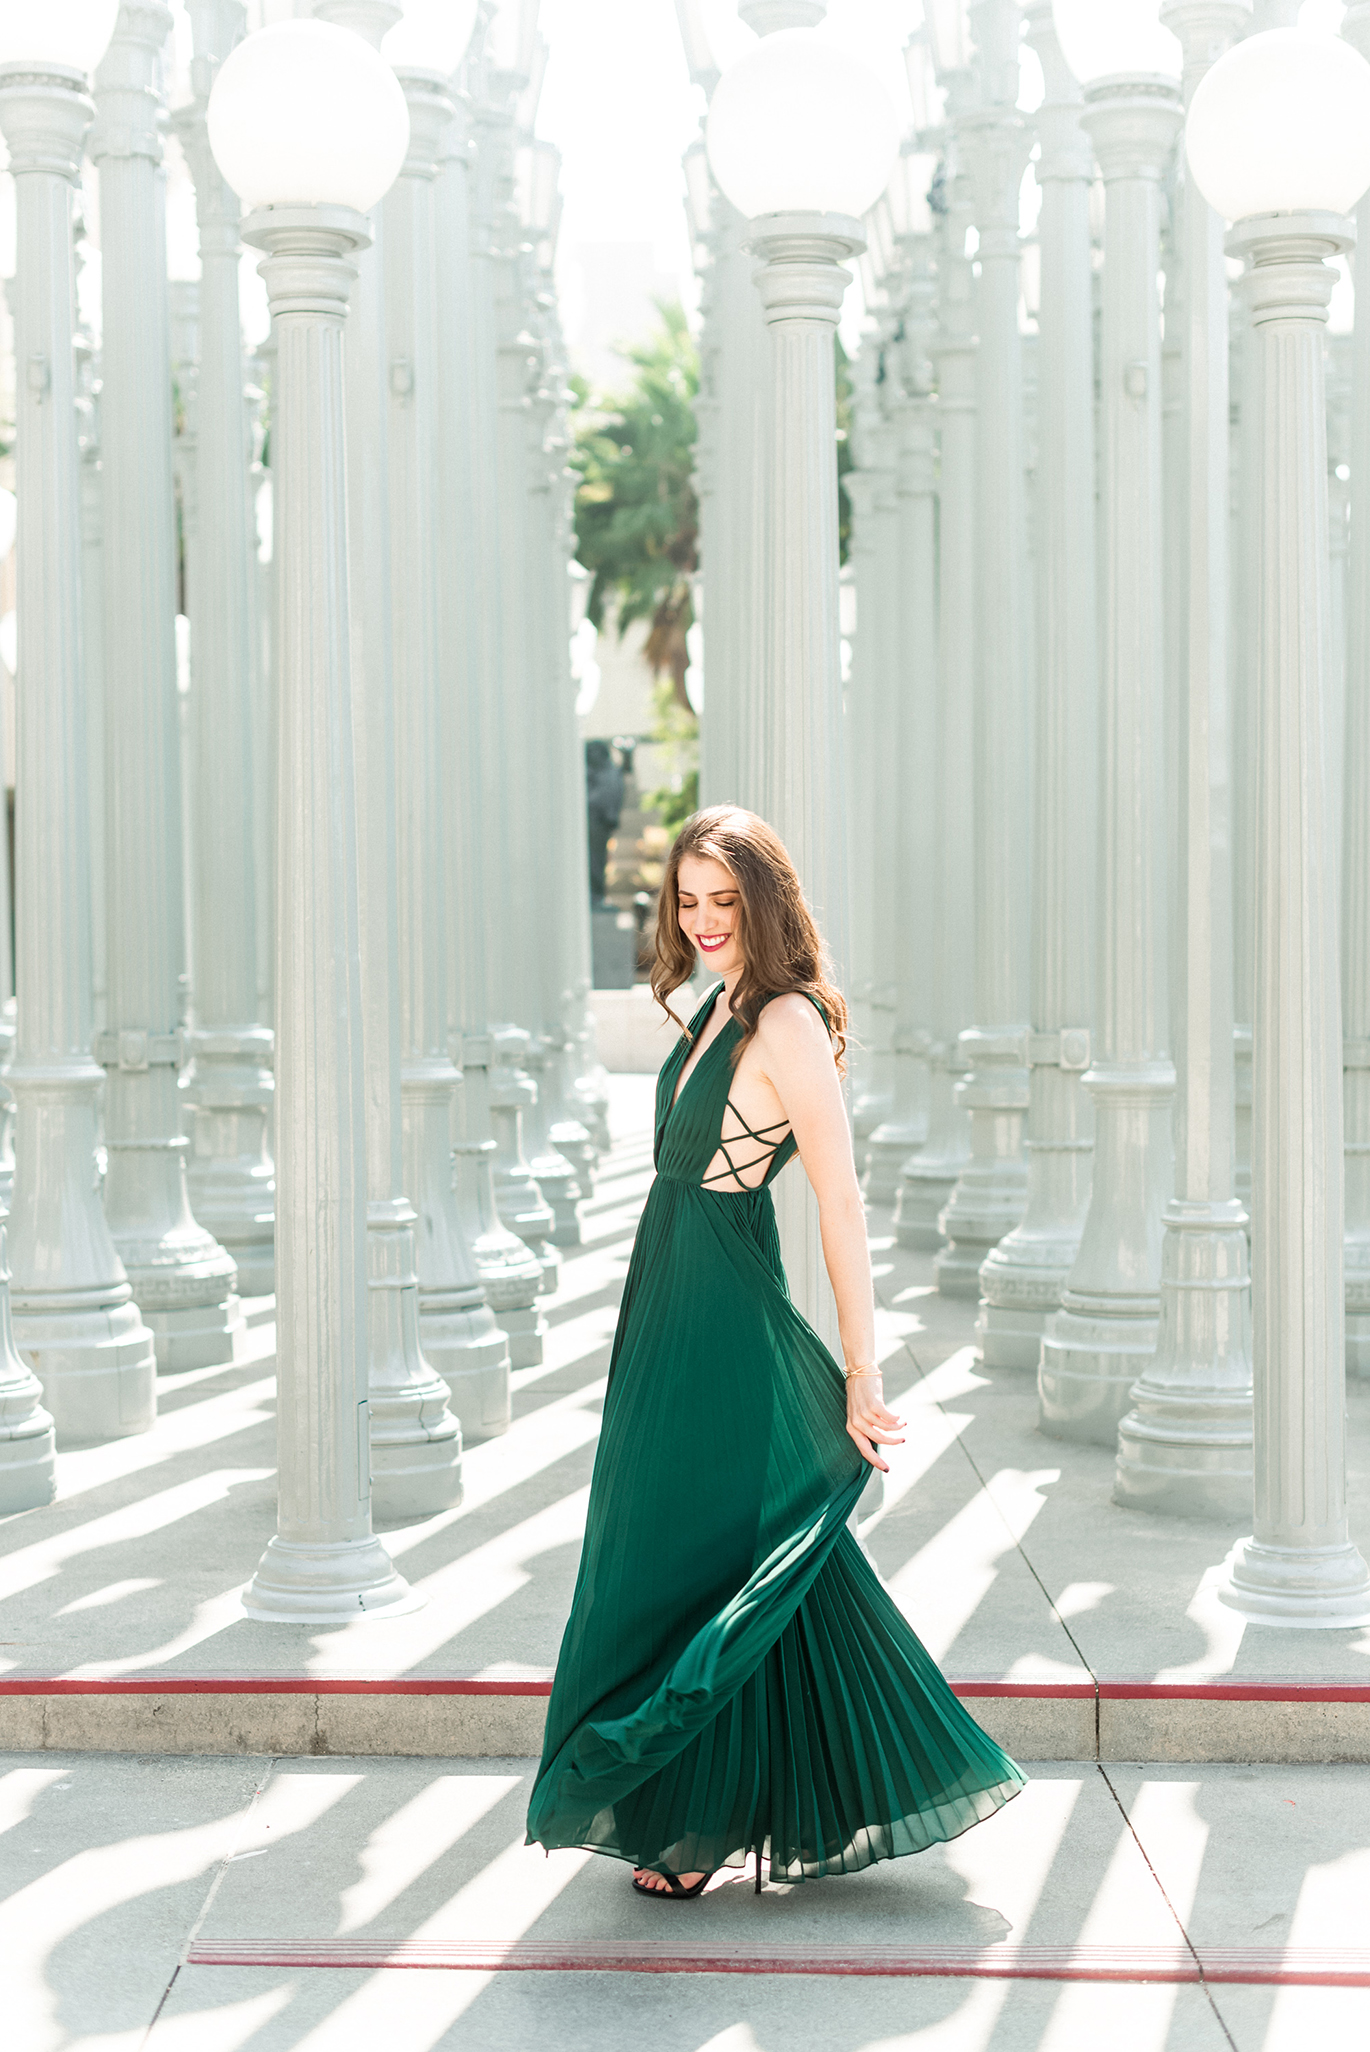 Los Angeles fashion blogger